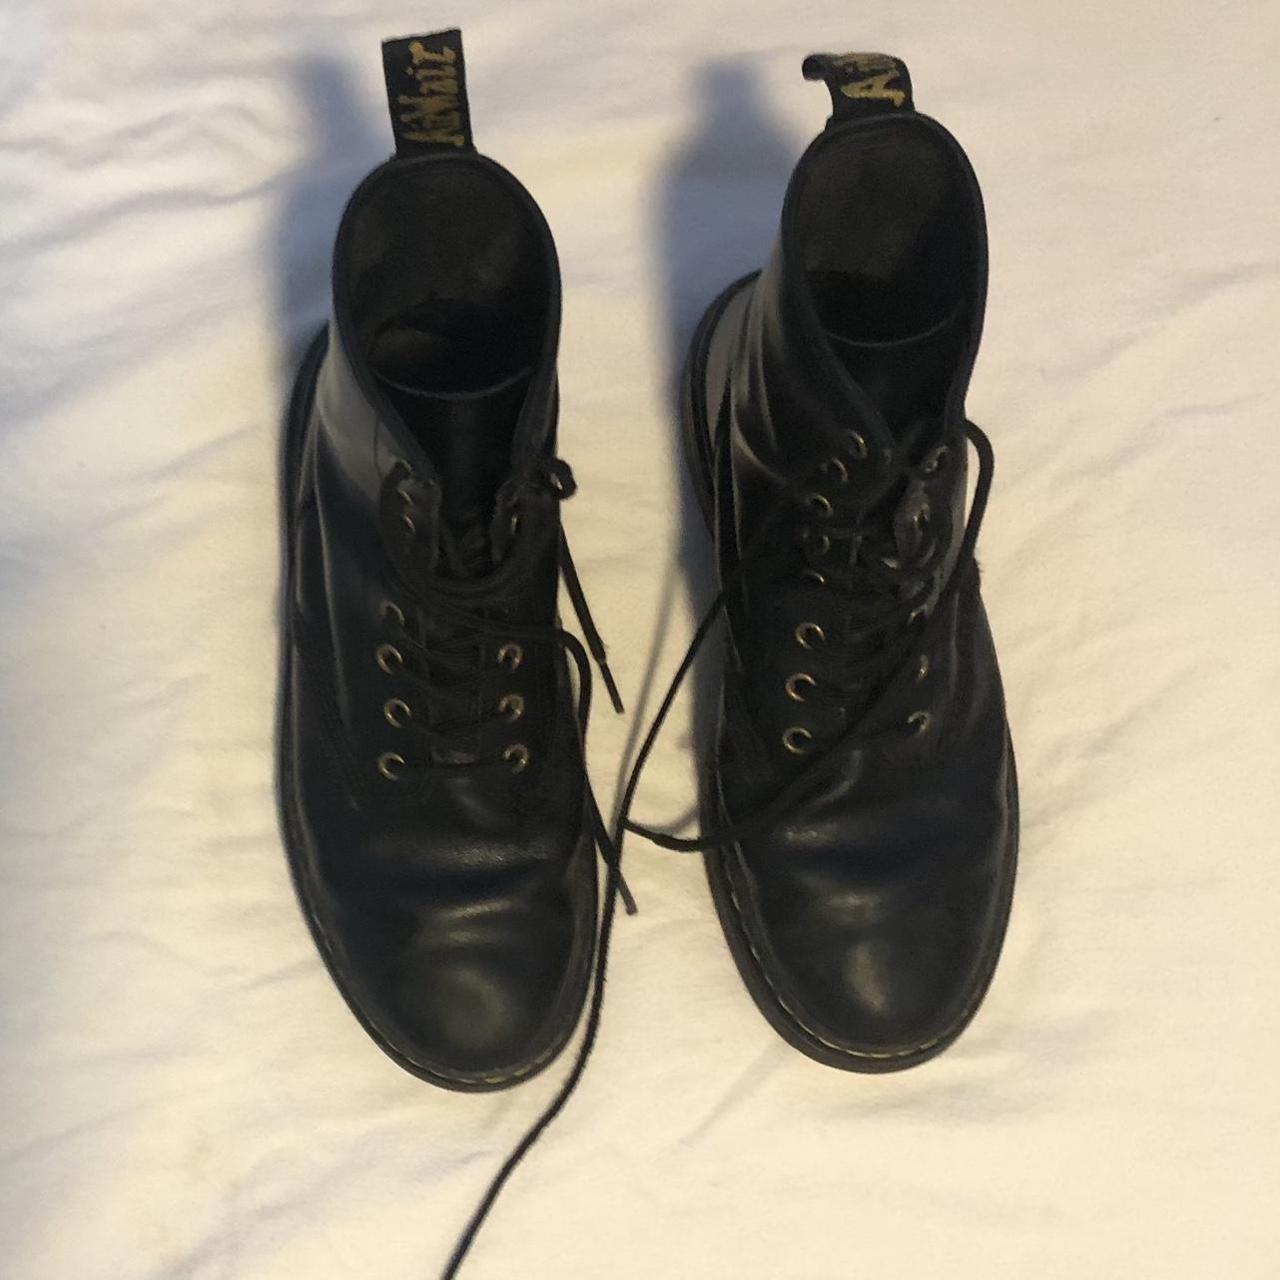 Airwalk Women's Black Boots | Depop